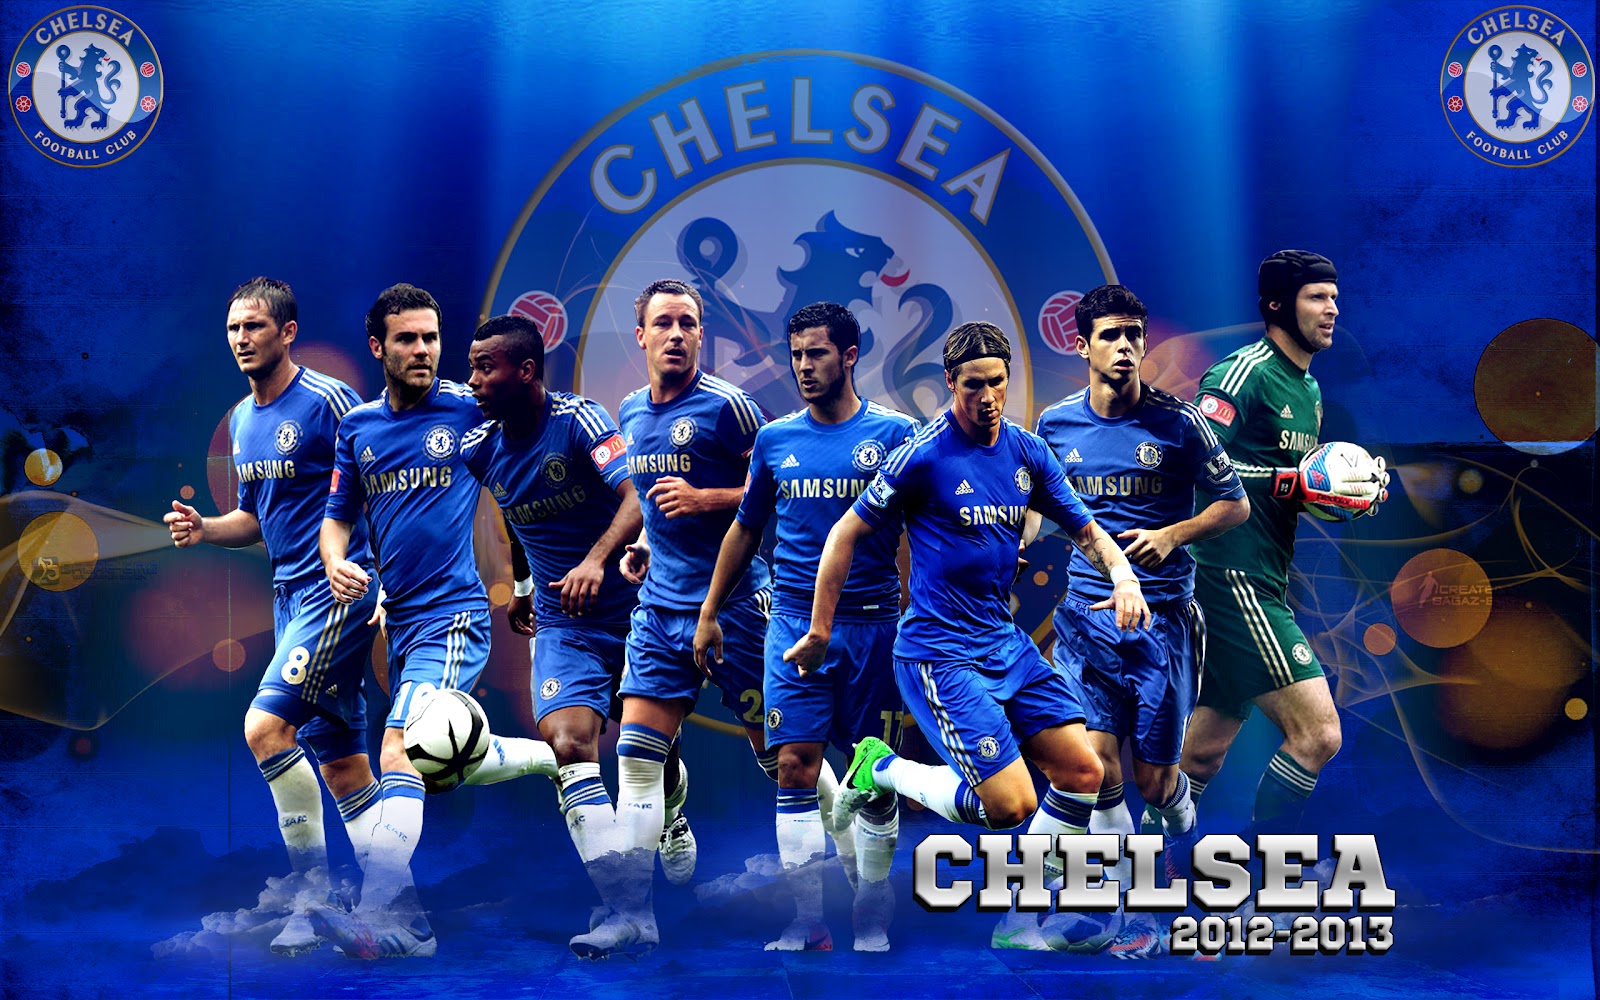 Football: Chelsea FC Soccer HD Wallpapers 2012-2013